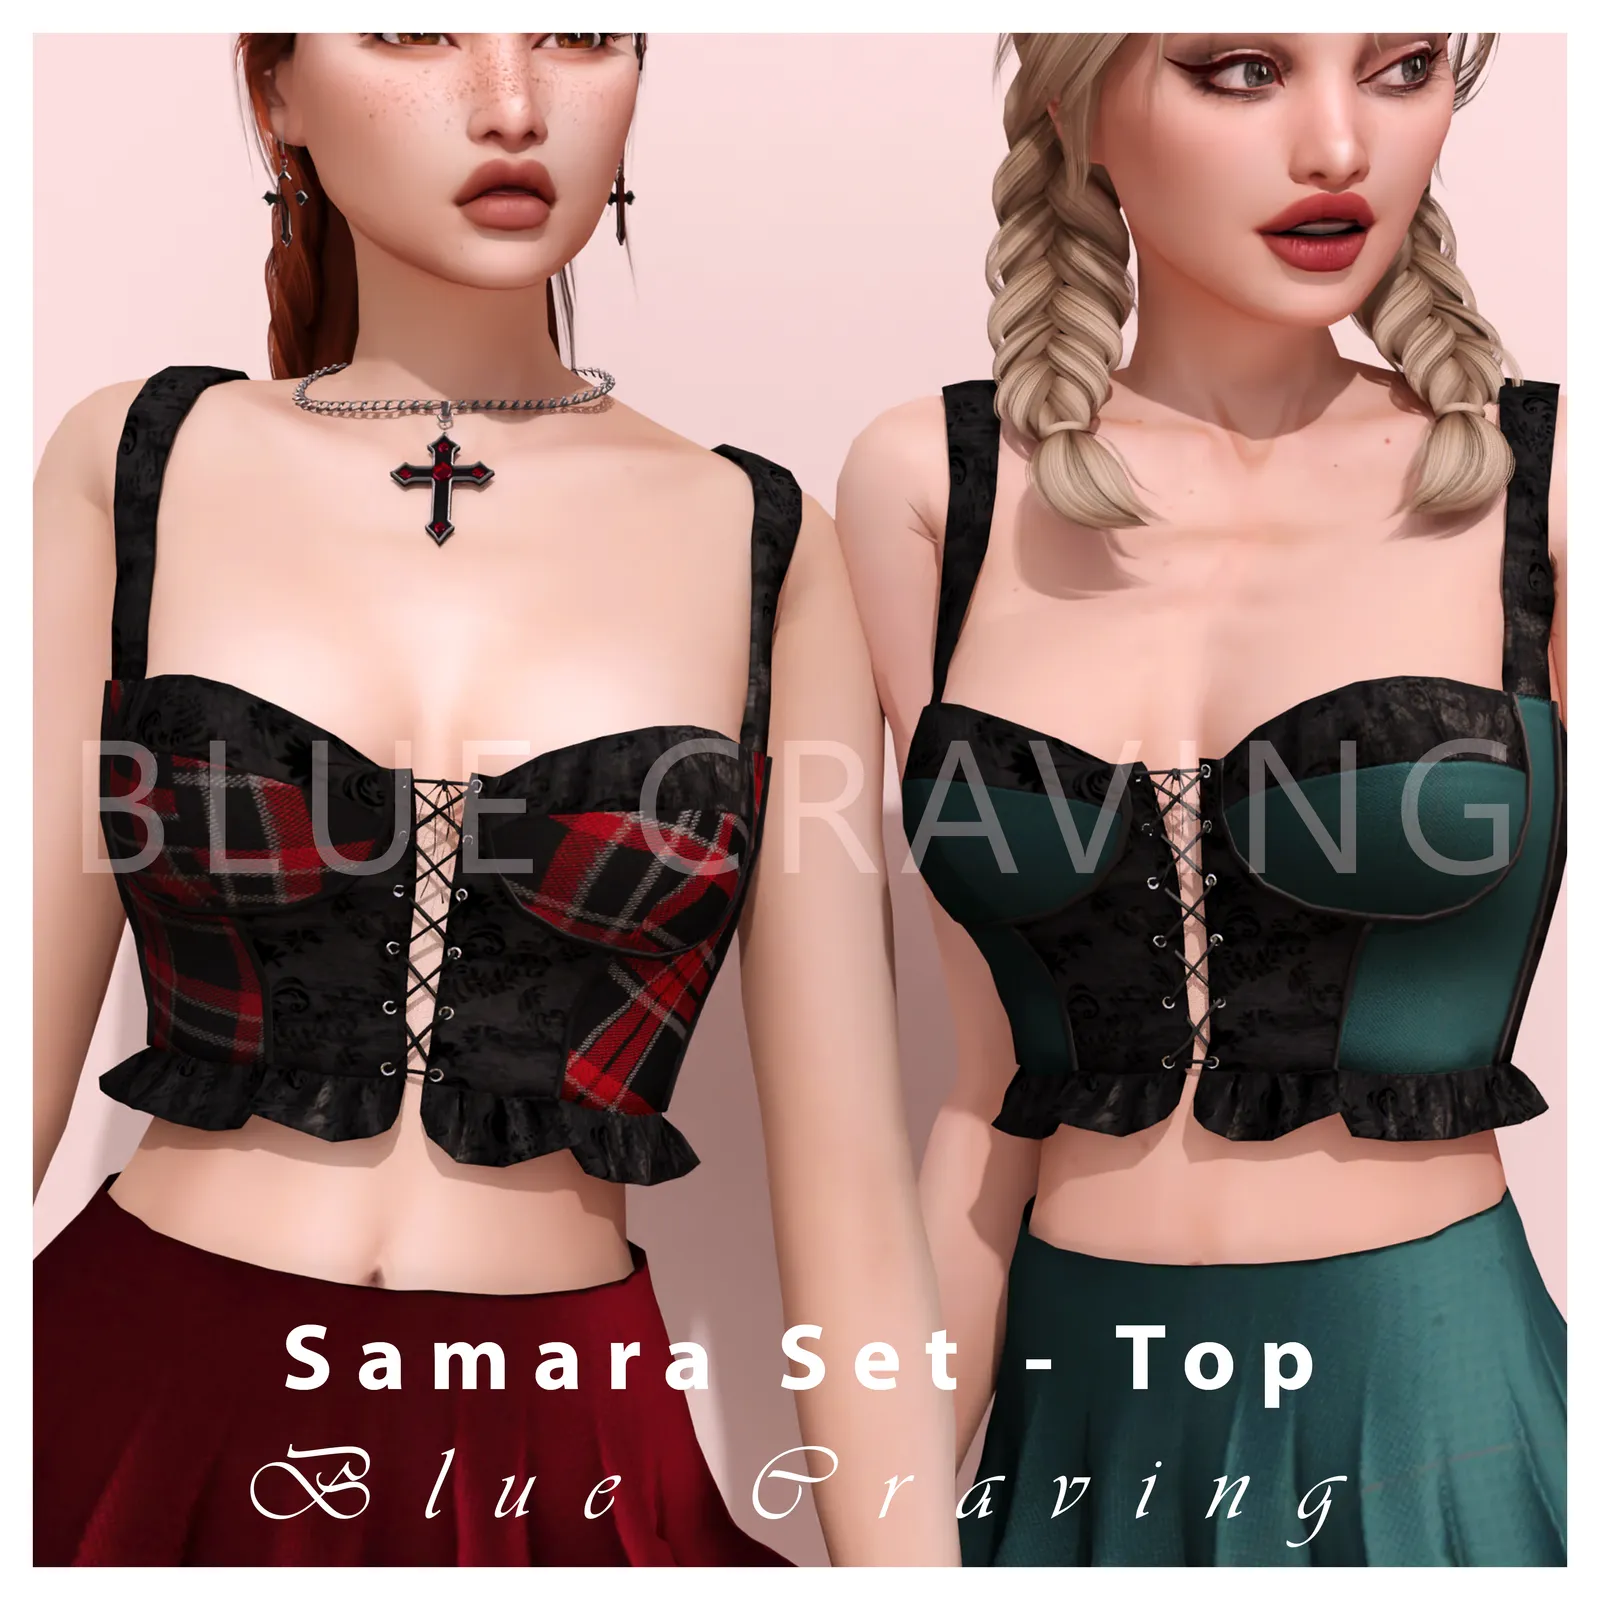 Samara set - Top